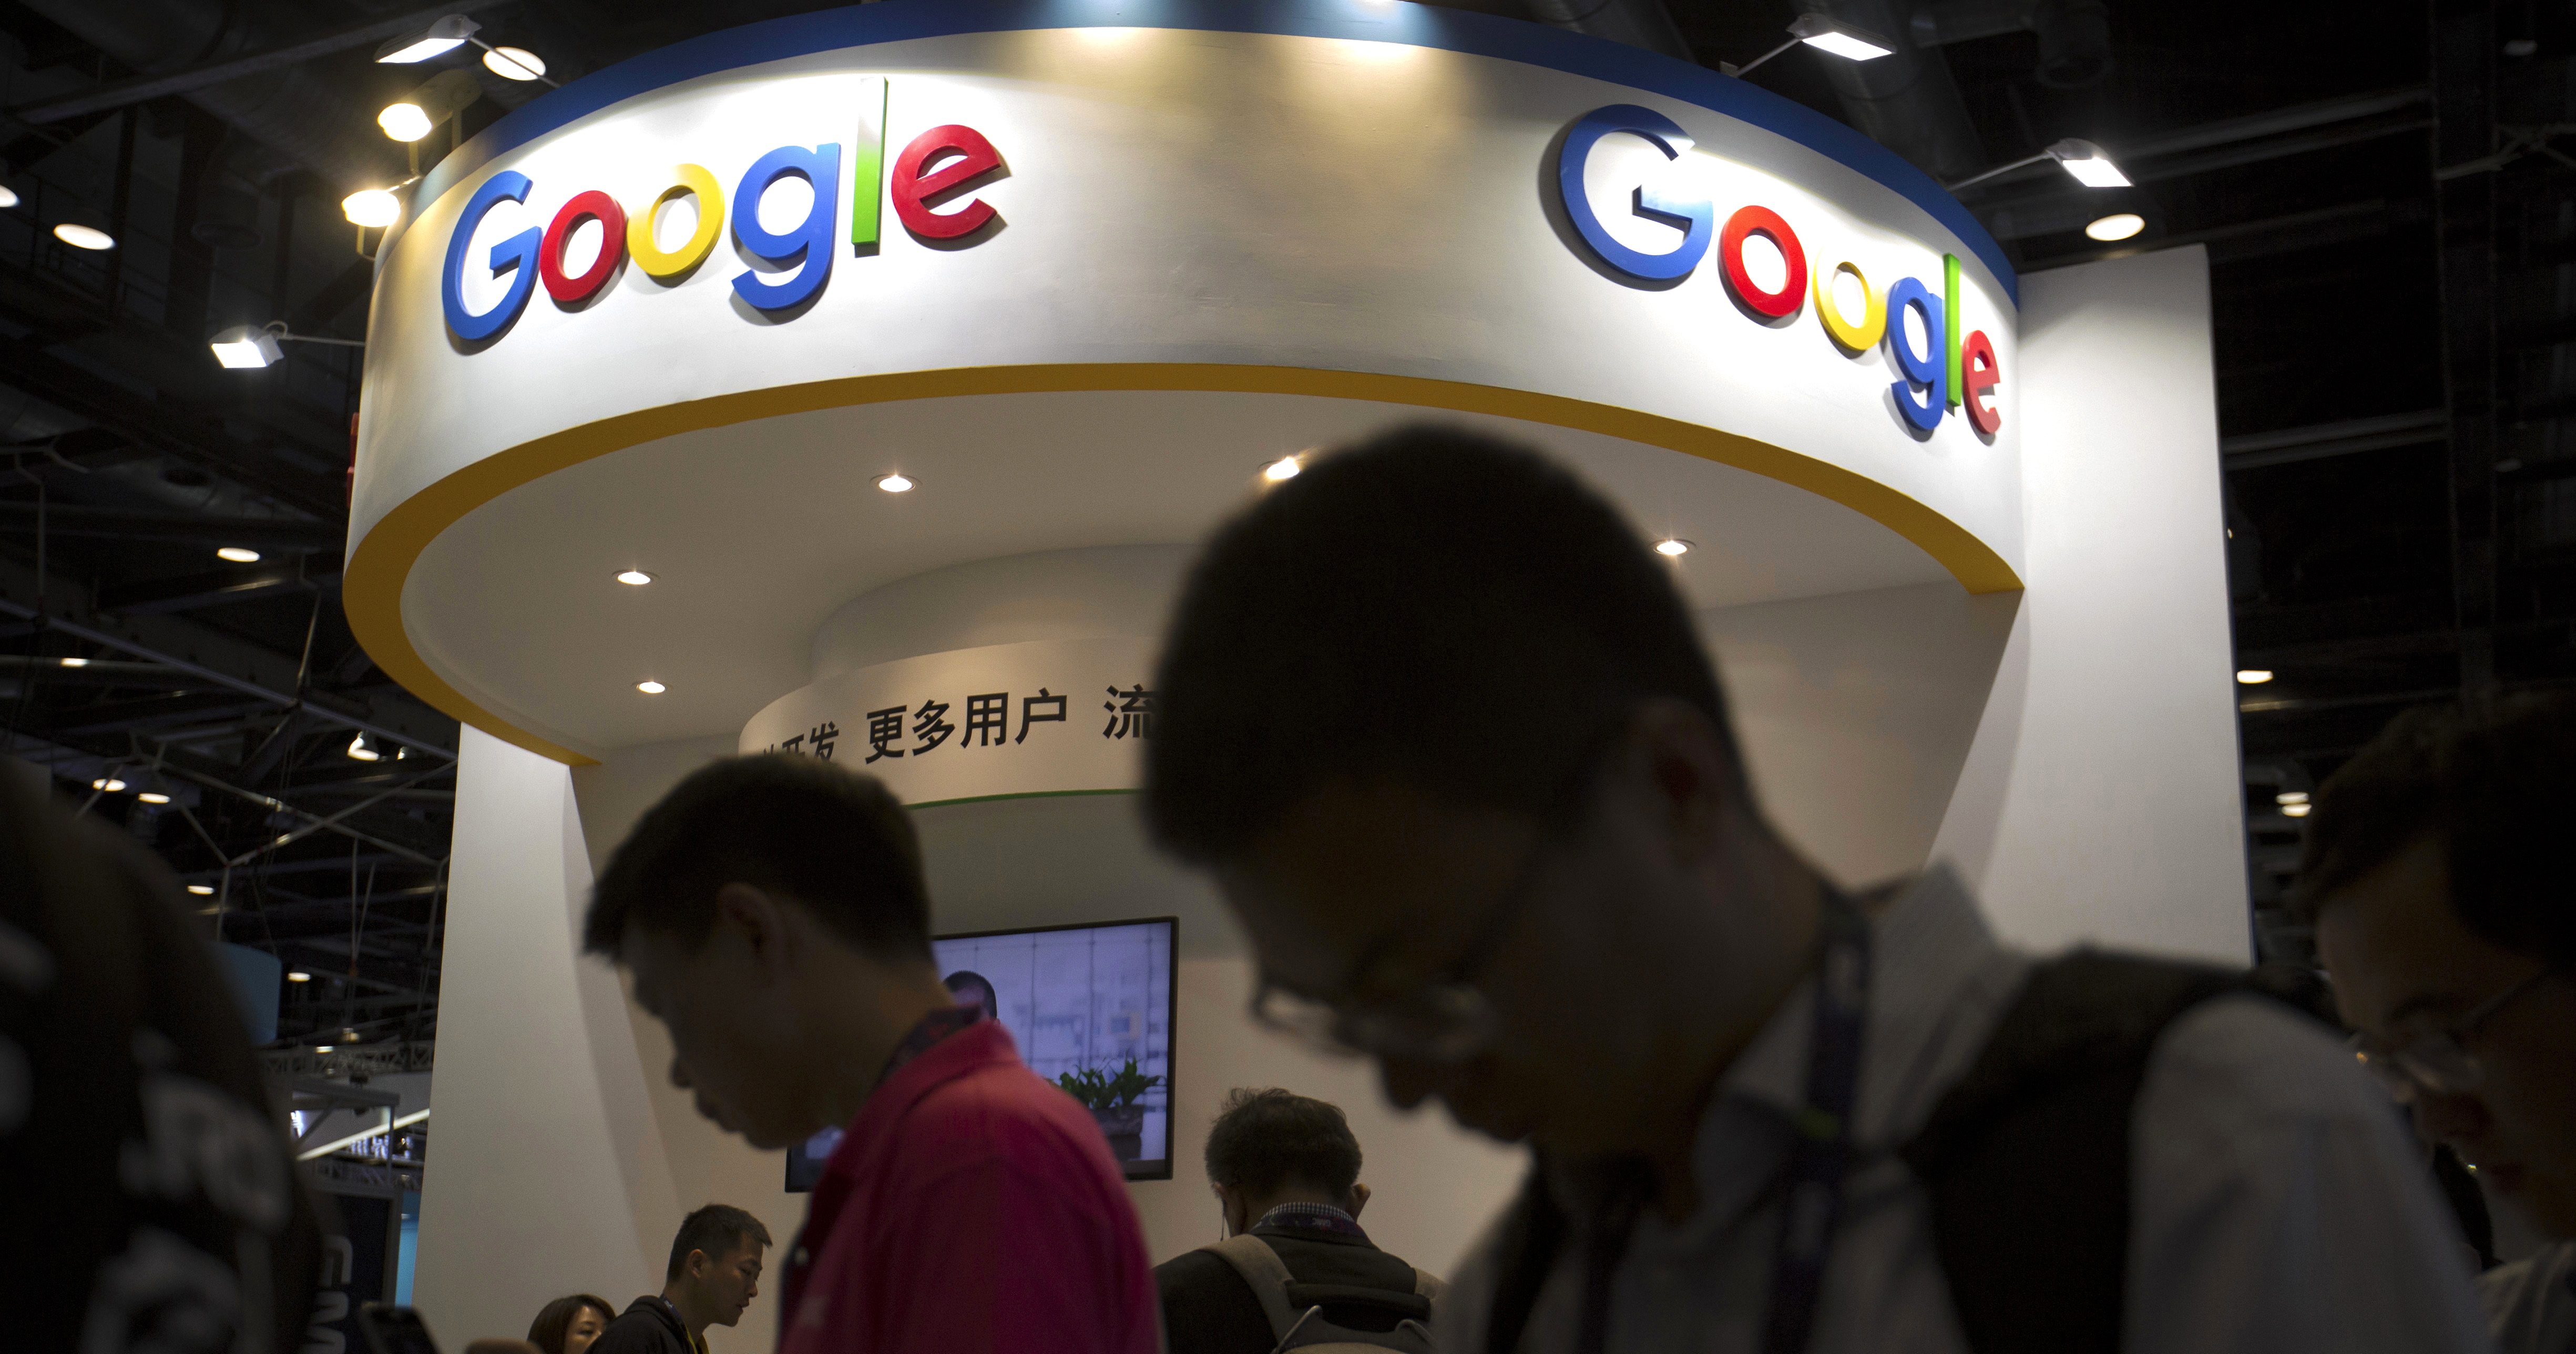 China Google Censored Search